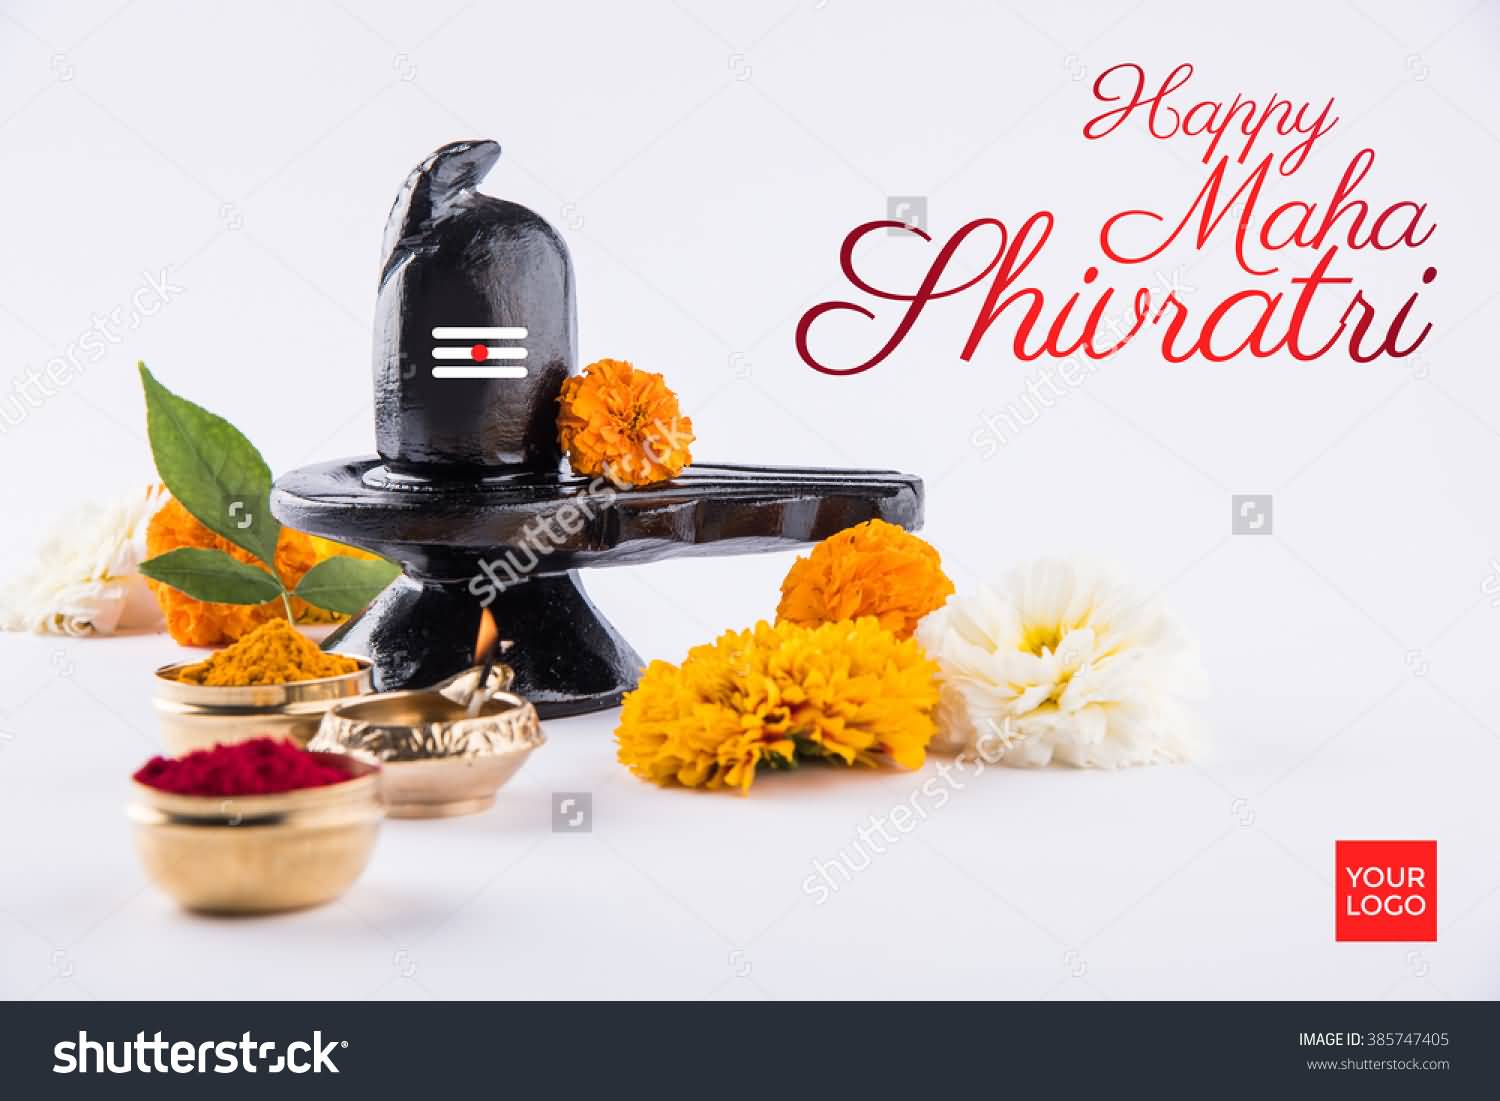 Happy Maha Shivaratri Shivling Puja Greeting Card